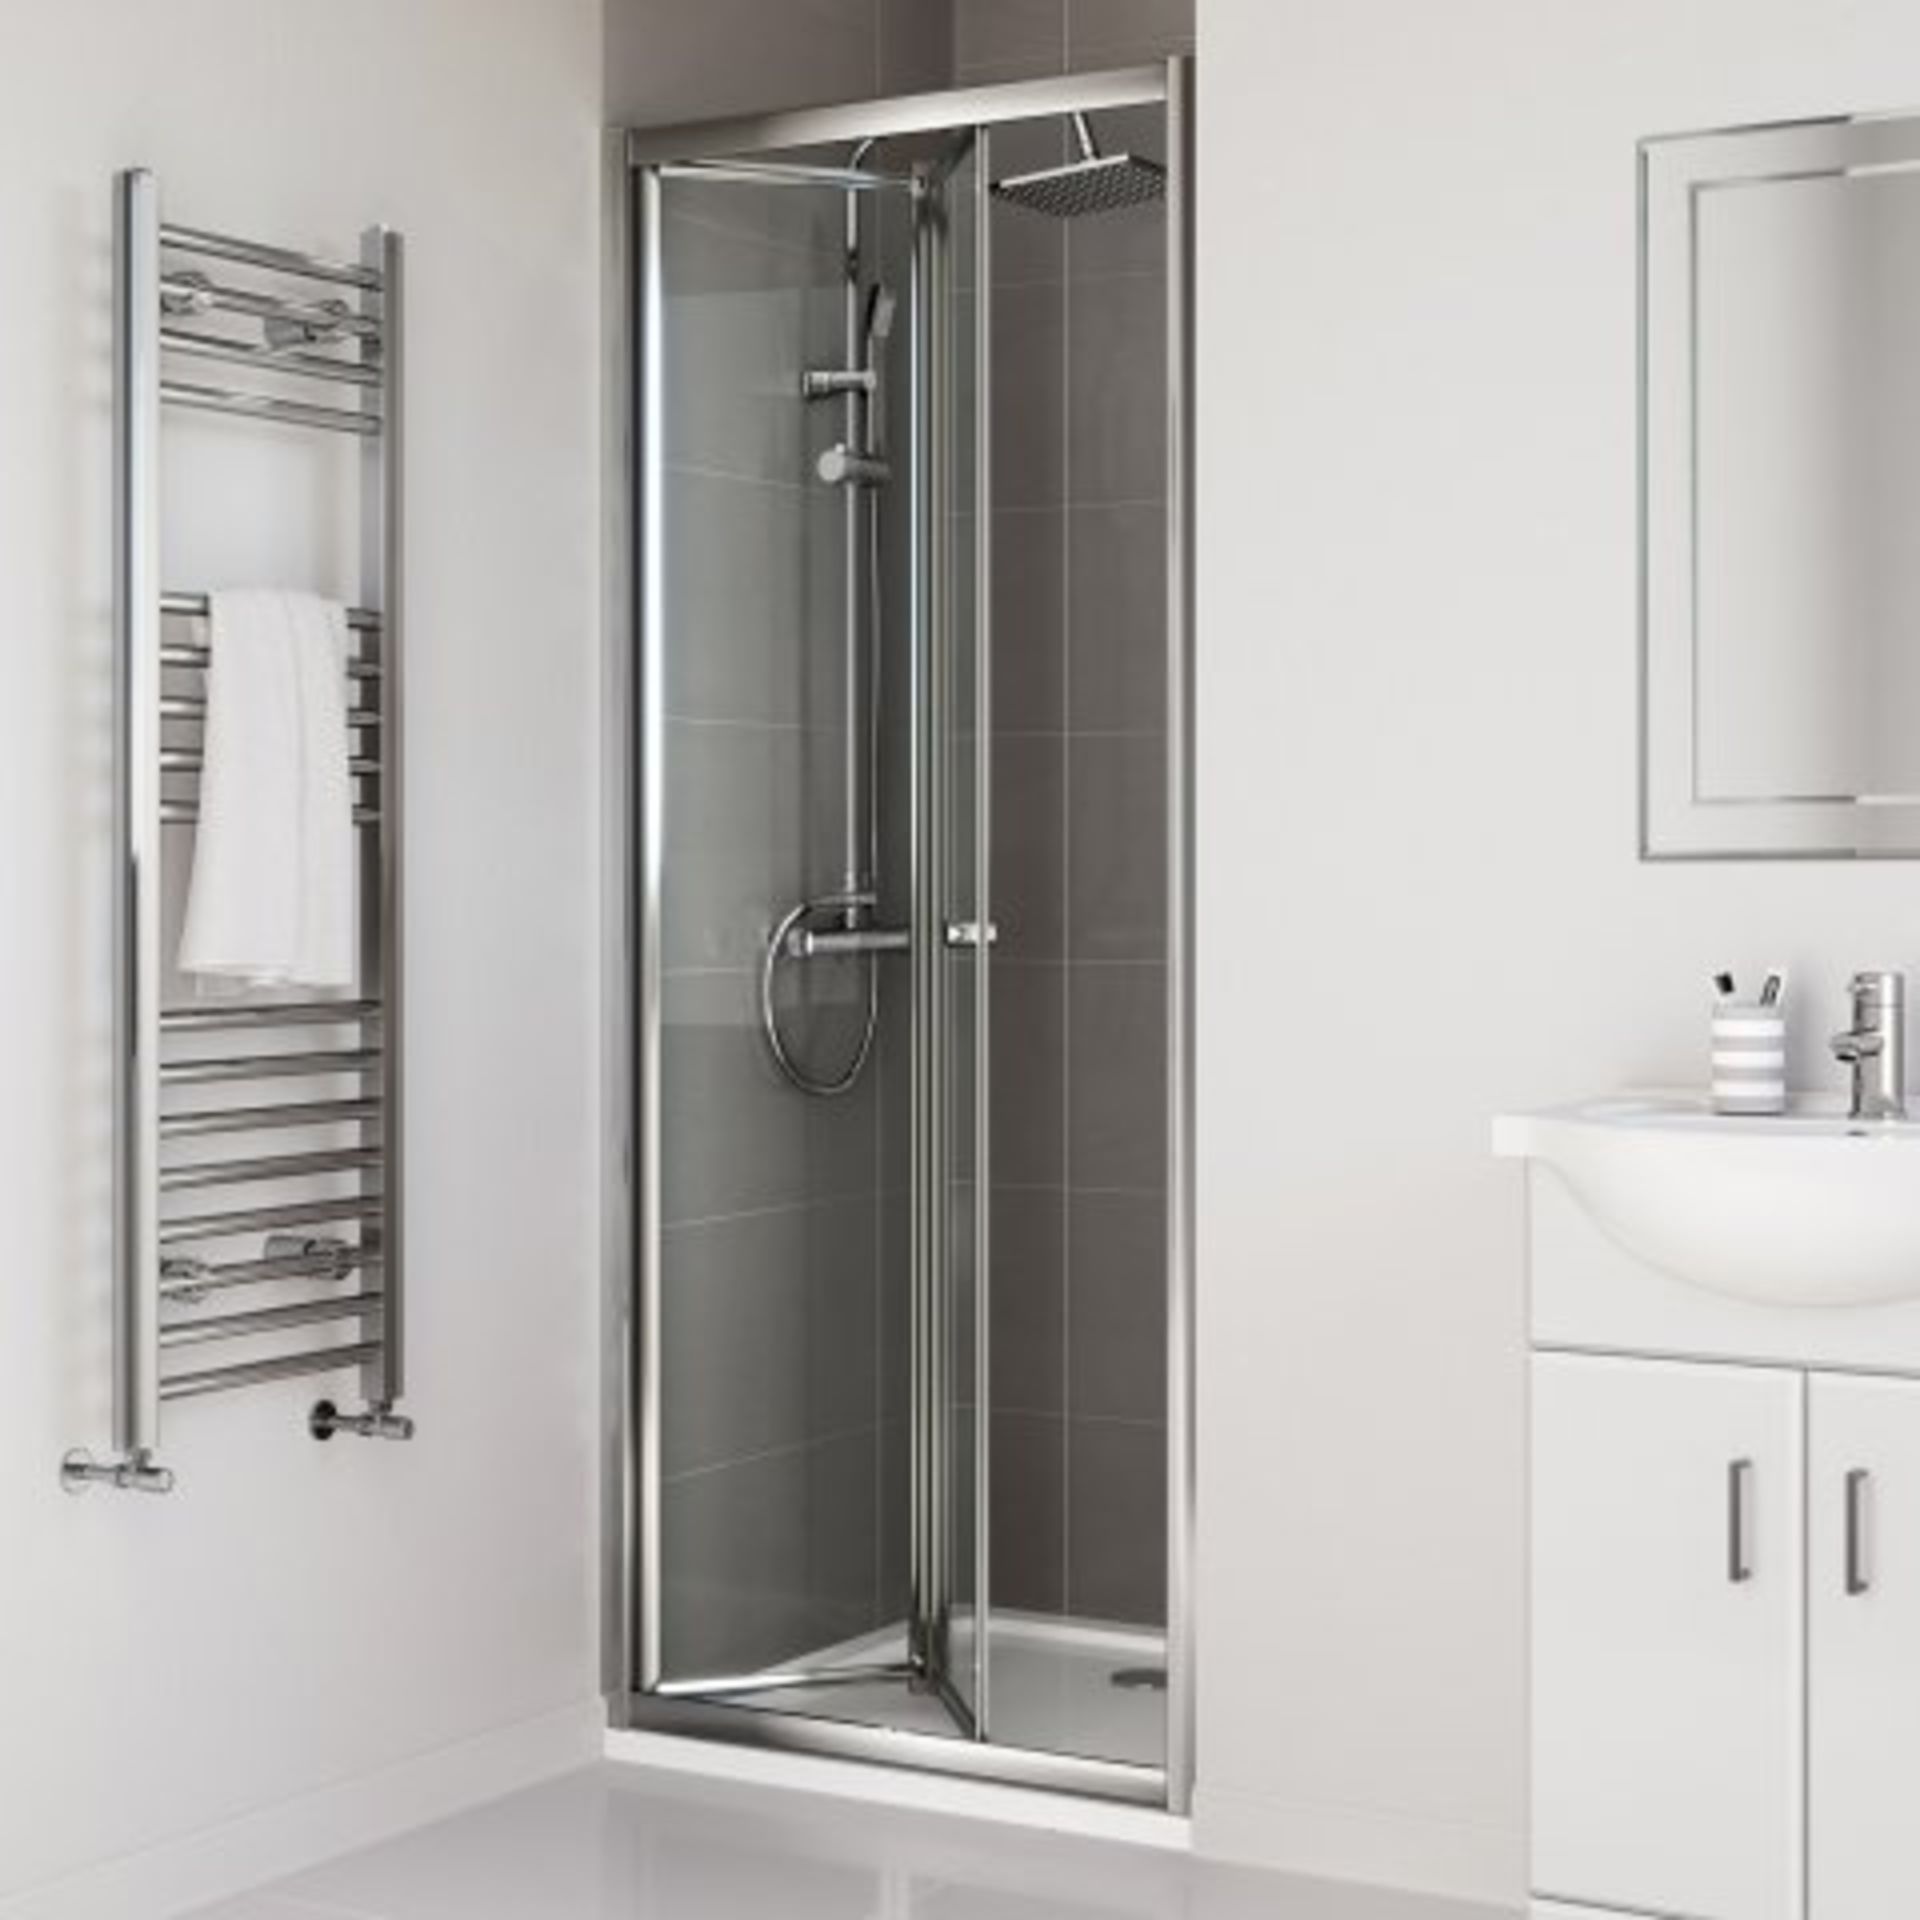 (N119) 900mm - Elements Bi Fold Shower Door. RRP £299.99. Budget Solution Our entry level range of - Image 2 of 3